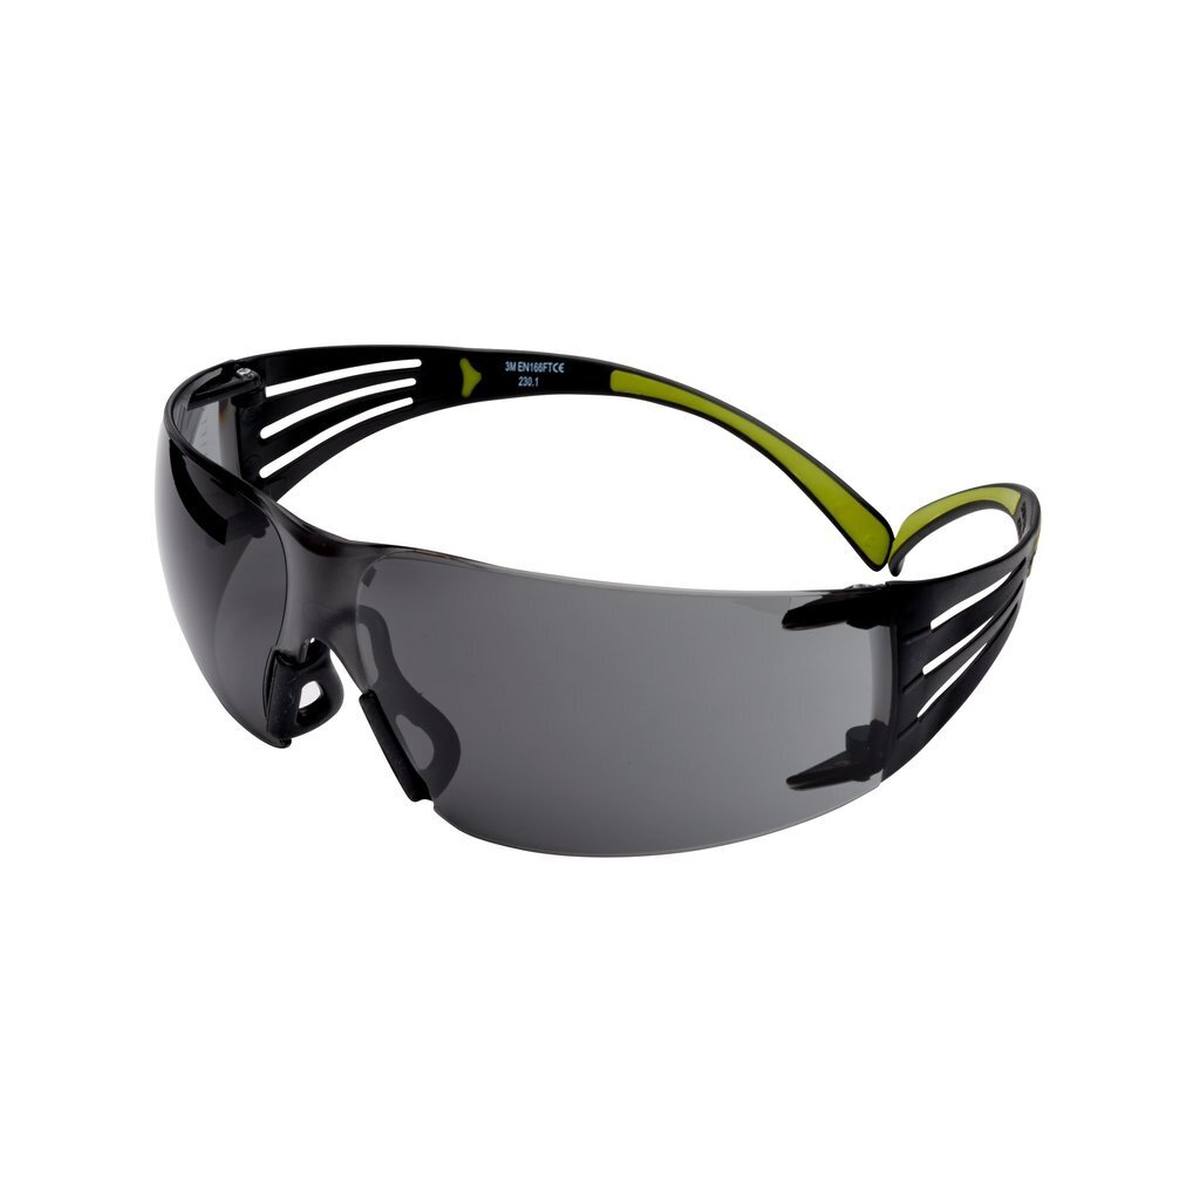 3M SecureFit 400 safety spectacles, black/green temples, anti-scratch/anti-fog coating, grey lens, SF402AS/AF-EU